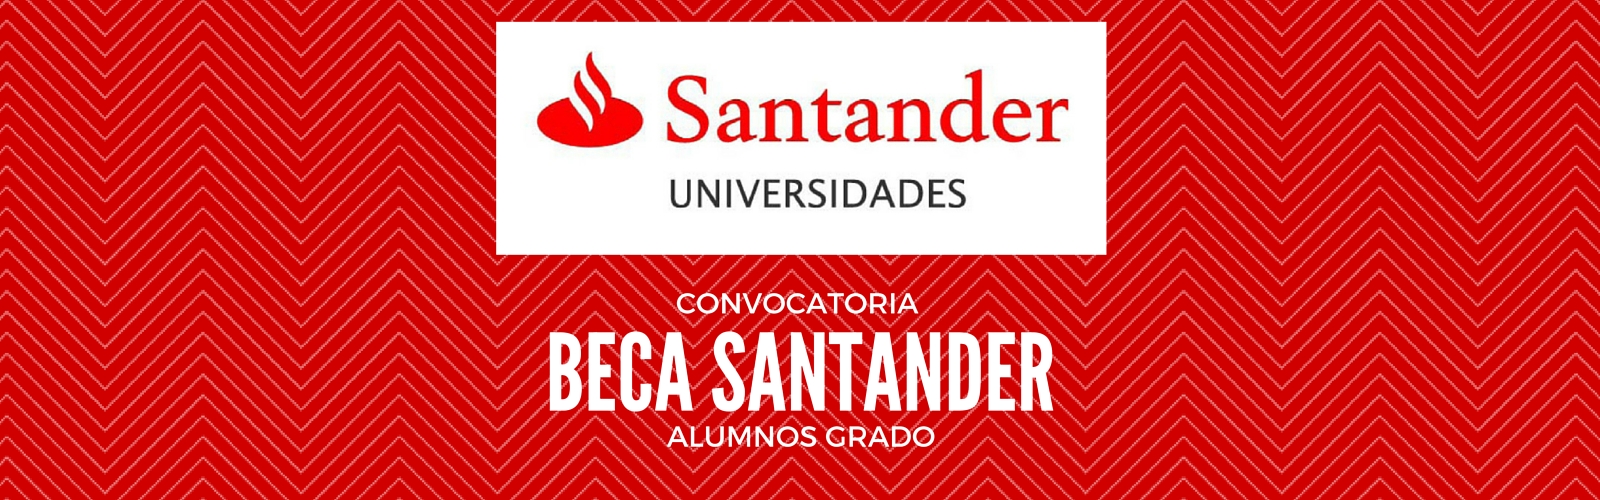 Convocatoria Beca Santander alumnos de Grado